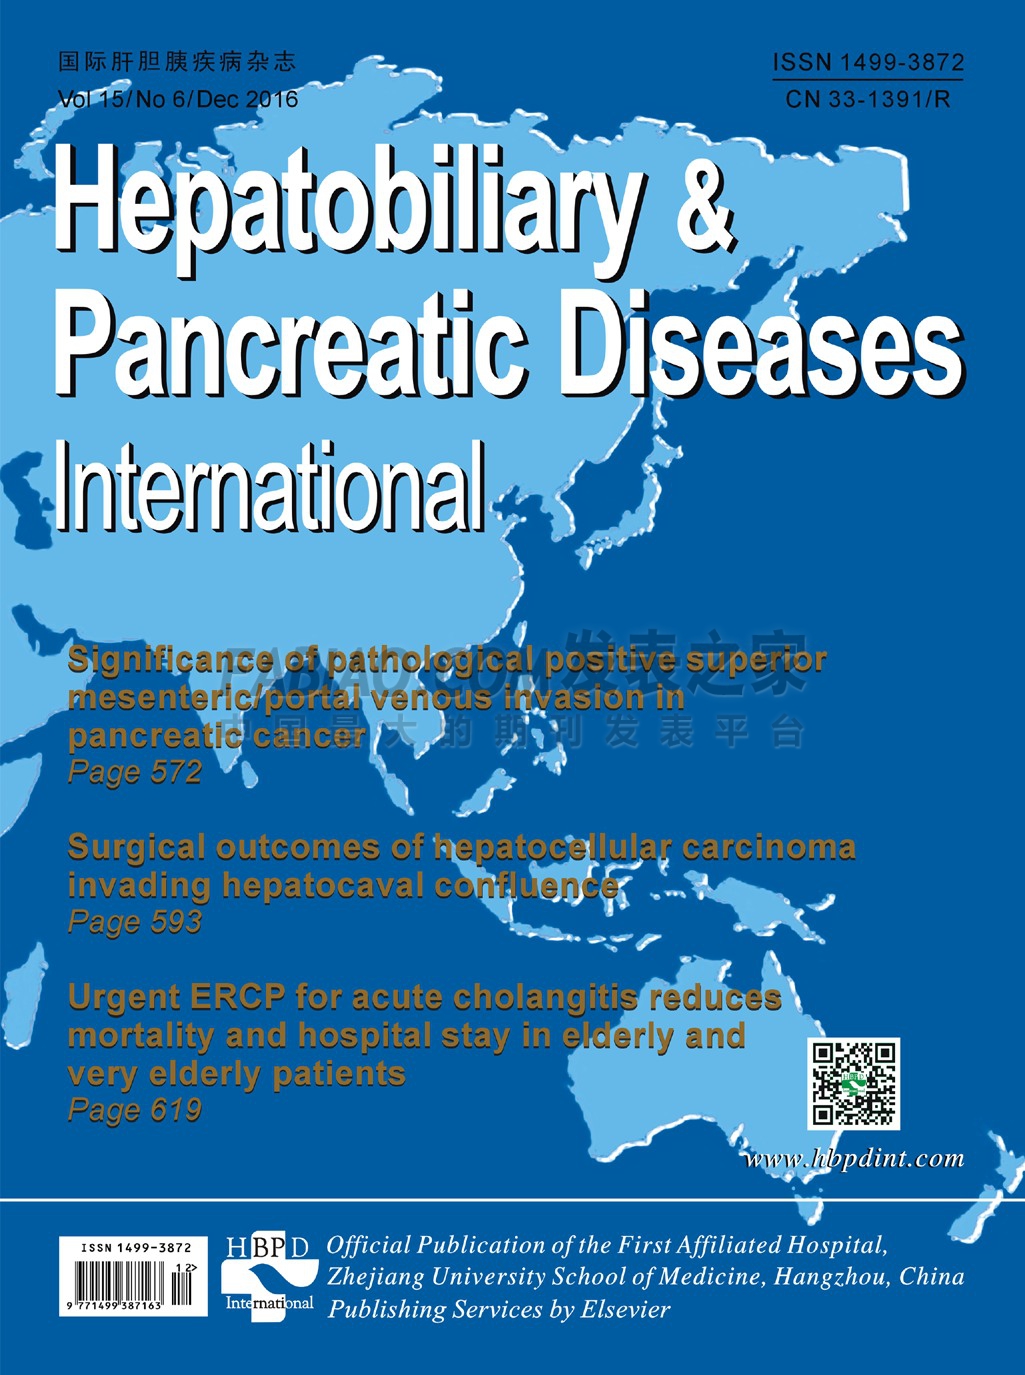 Hepatobiliary & Pancreatic Diseases International